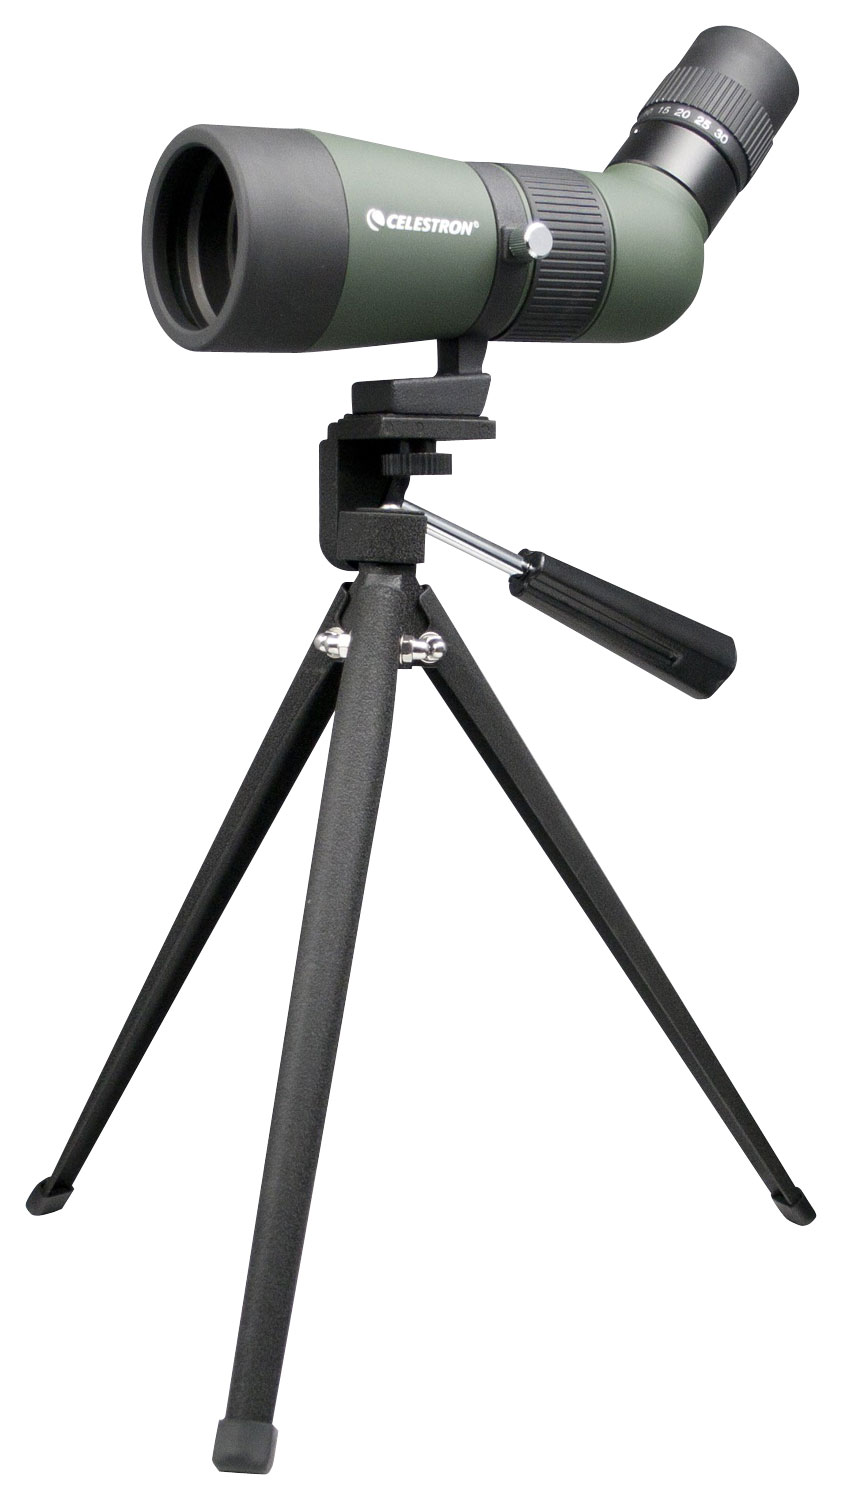 Angle View: Celestron - Landscout 10-30x 50mm Spotting Scope - Green/Gray